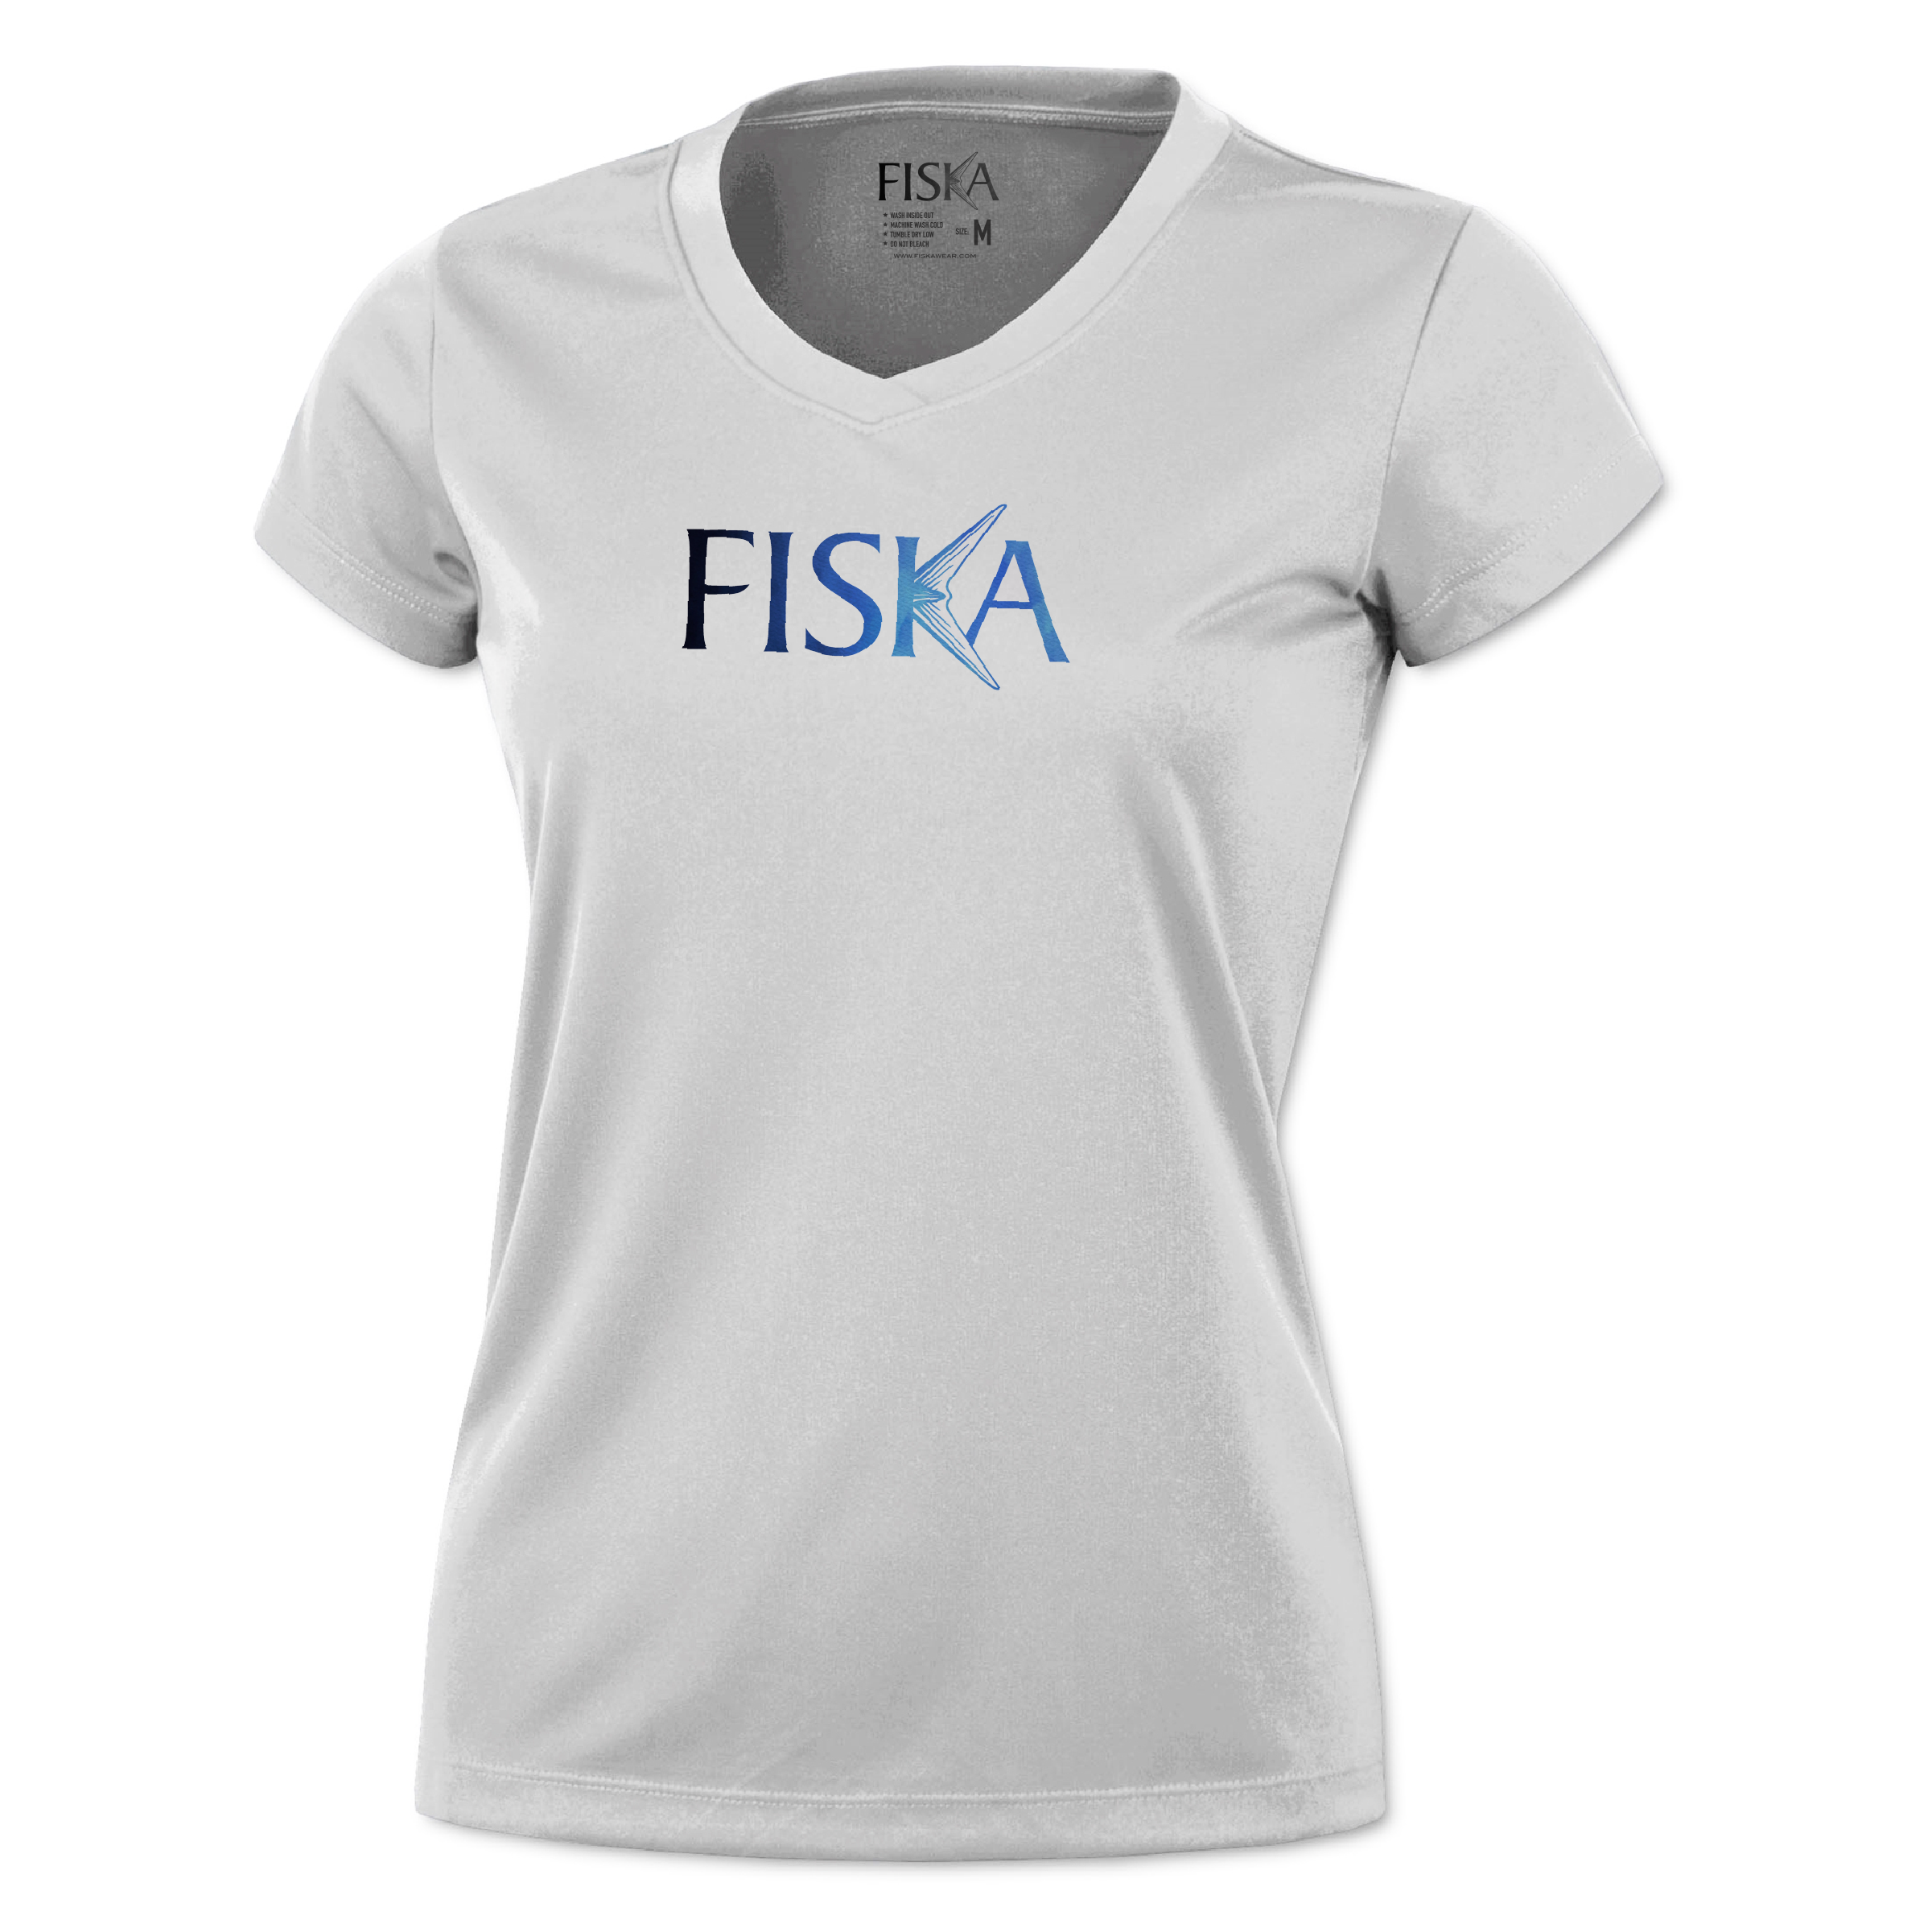 Bluefish Short-Sleeve Dry-Fit T-Shirt